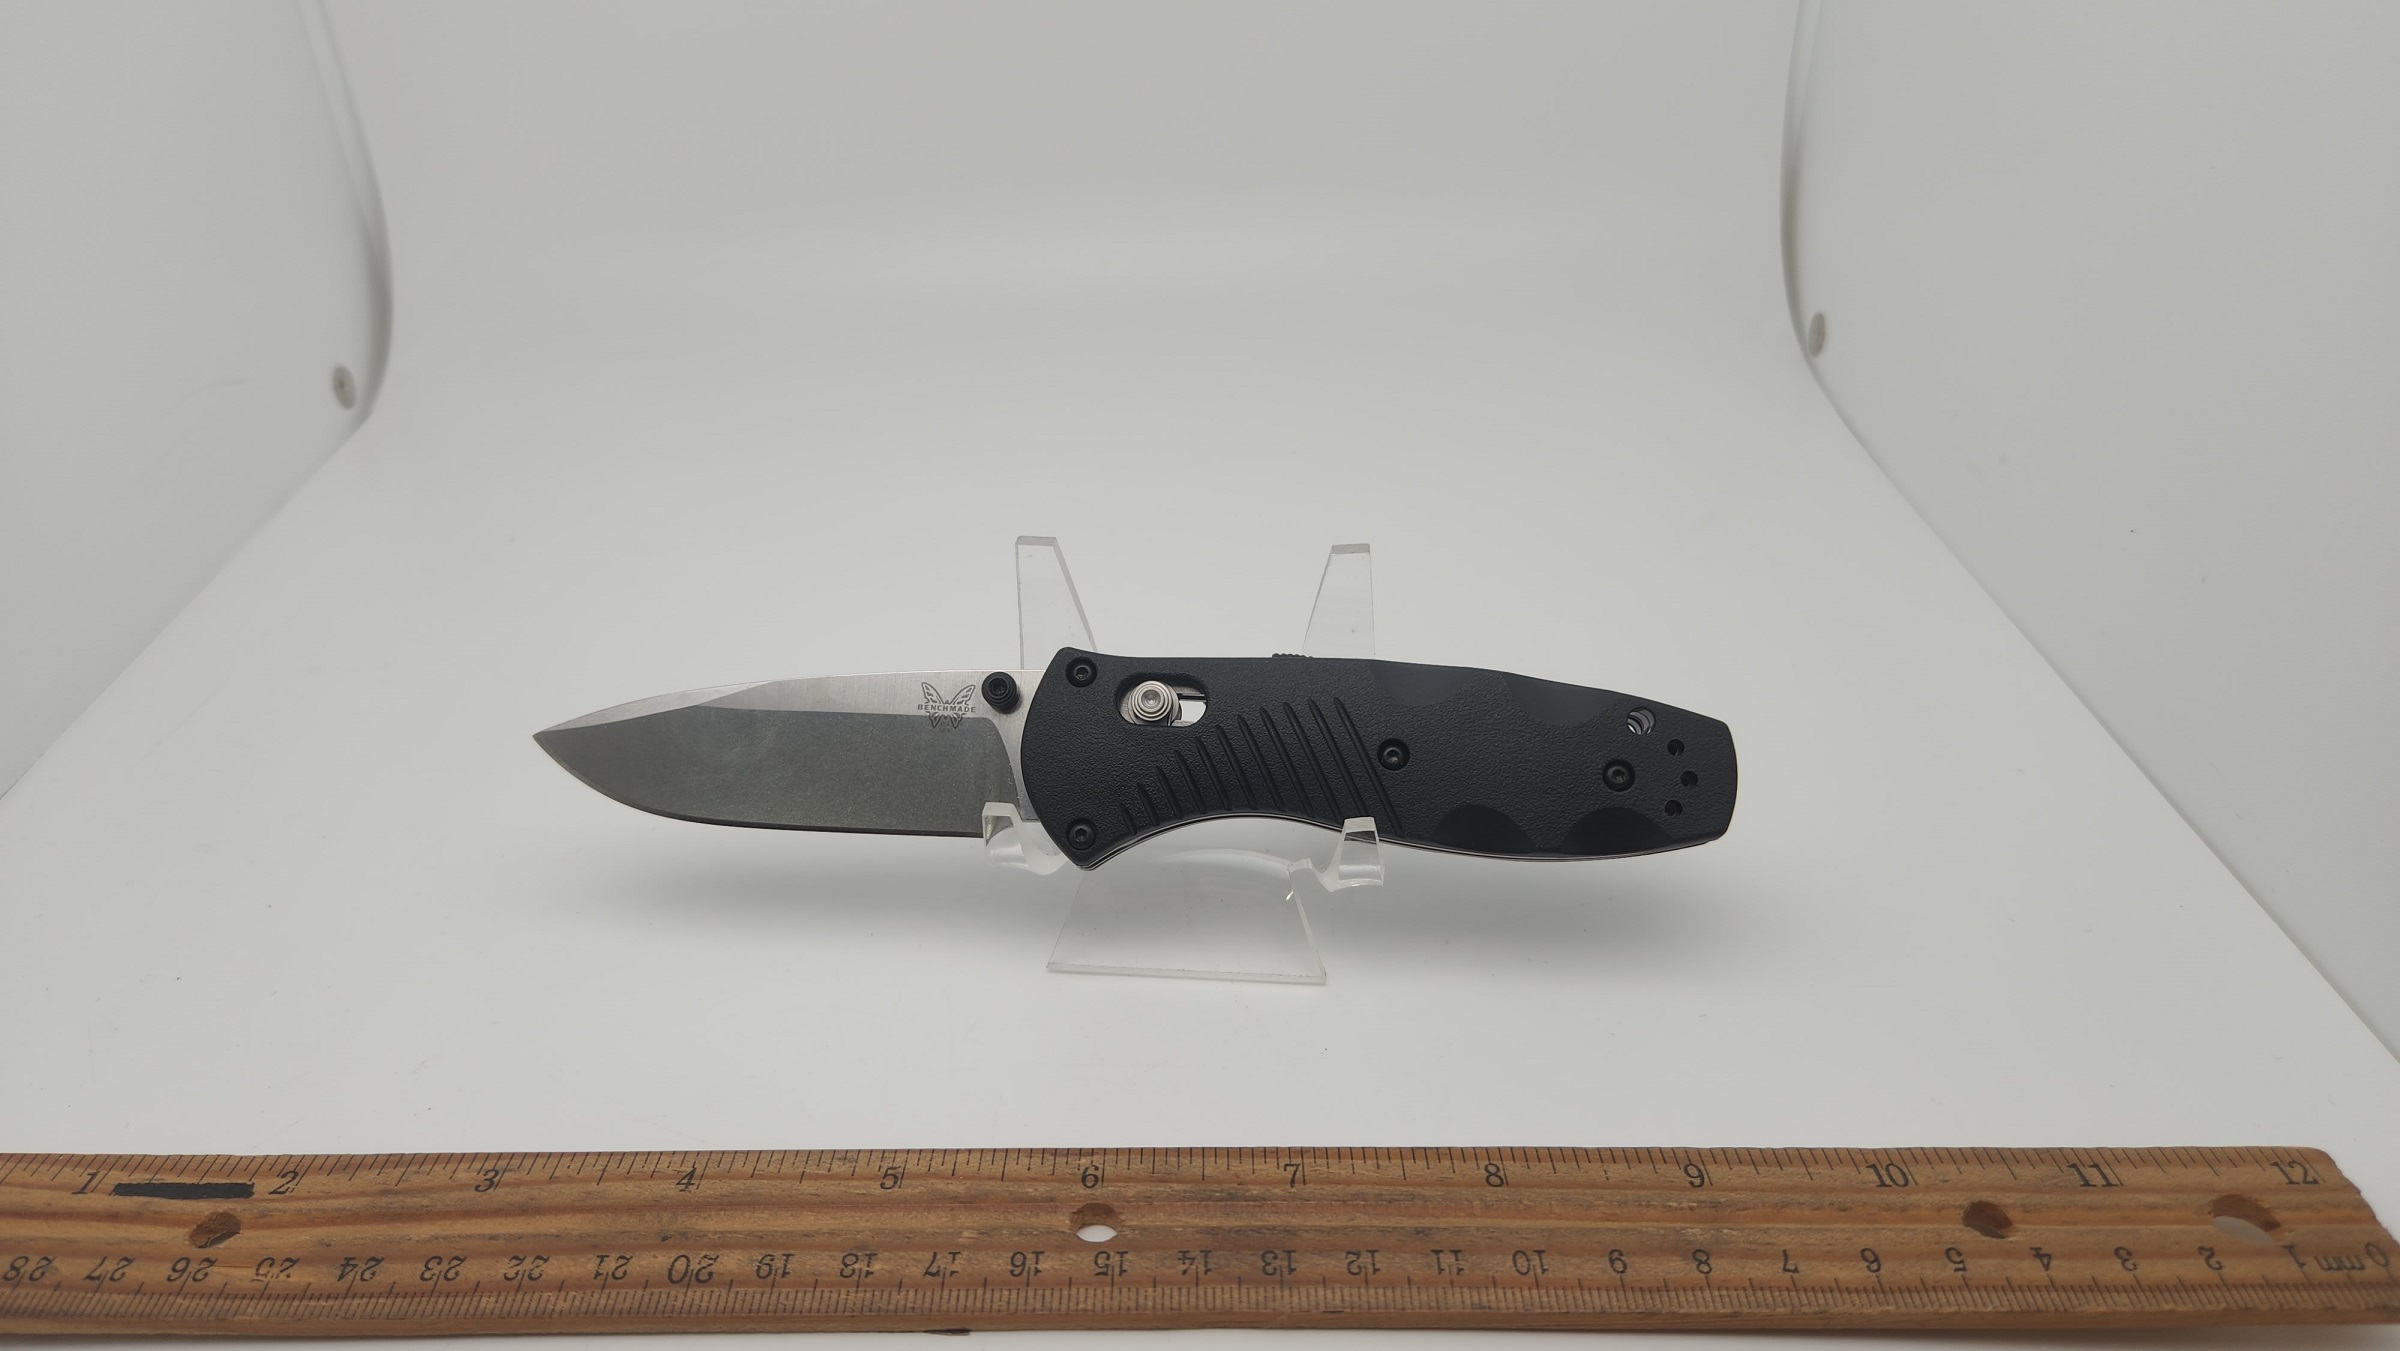 Benchmade Mini Tactical Pro Knife Sharpener